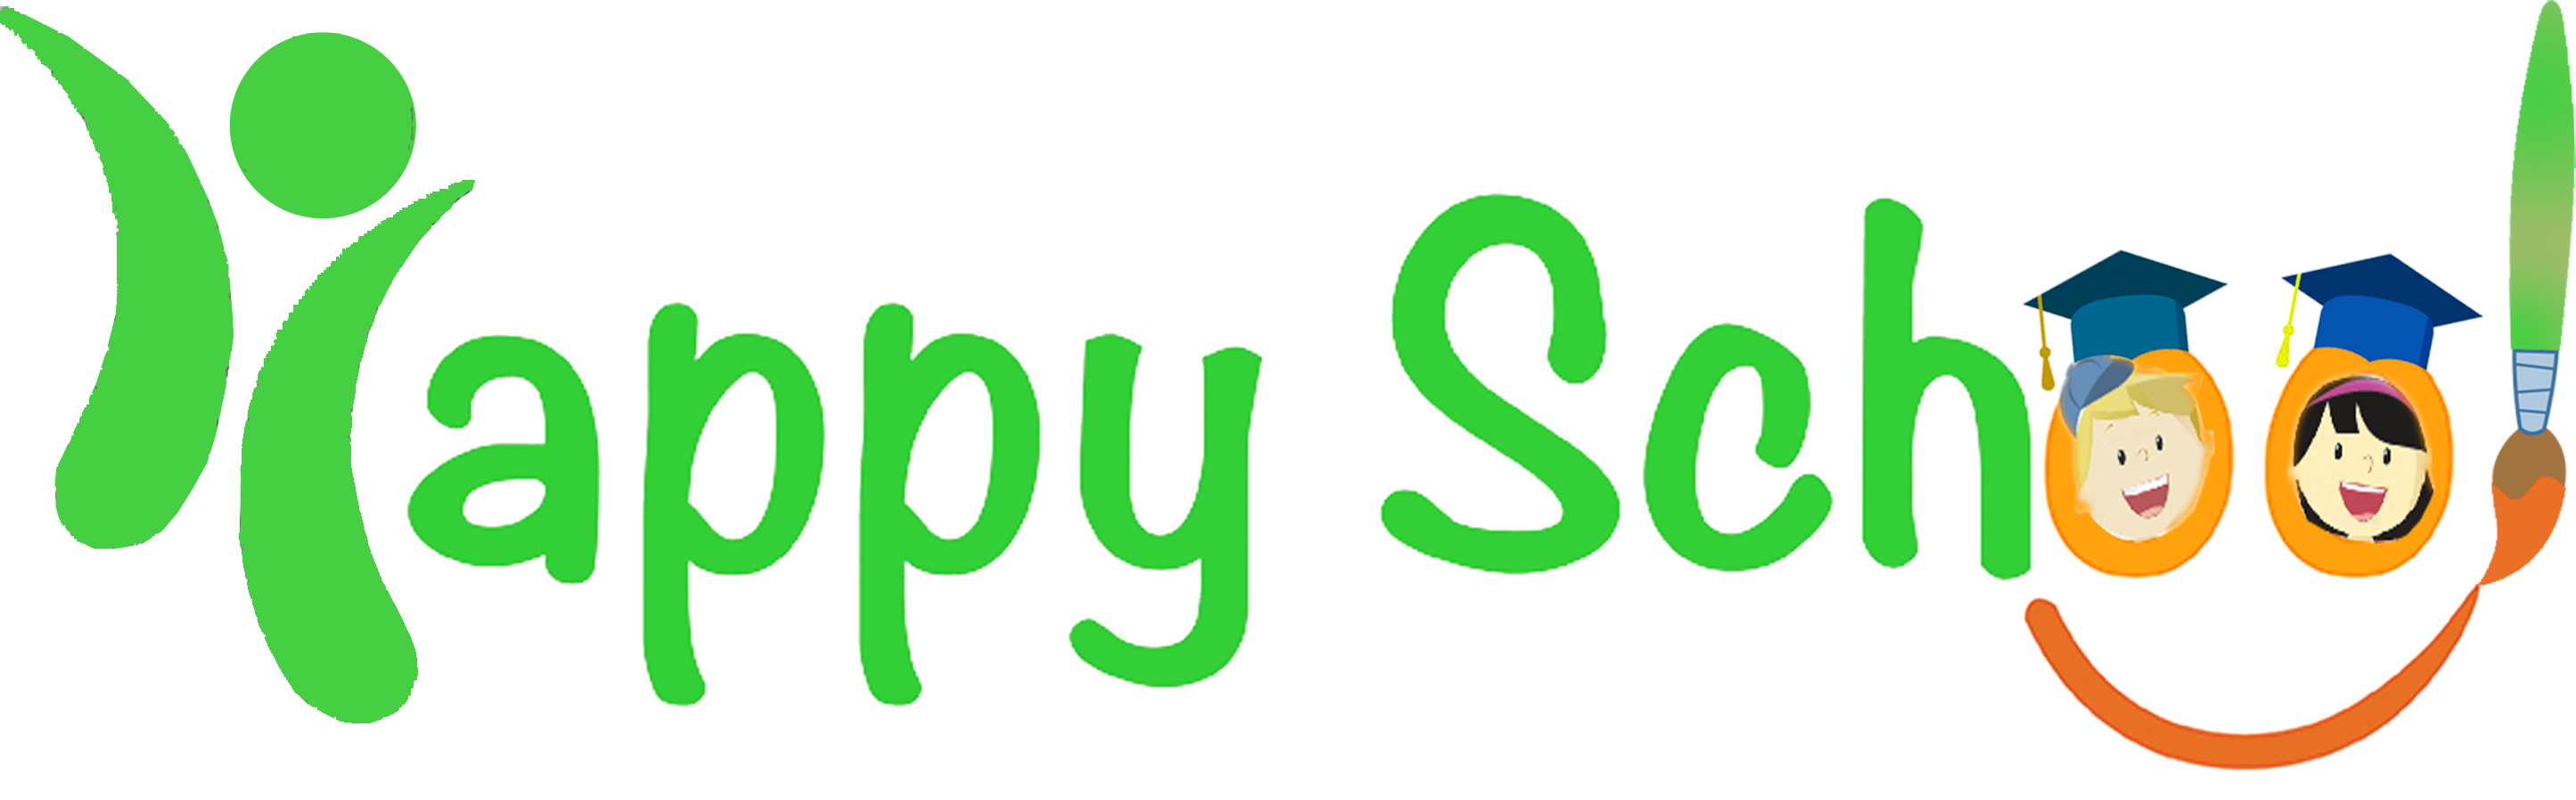 logo_happyschool_chinhthuc